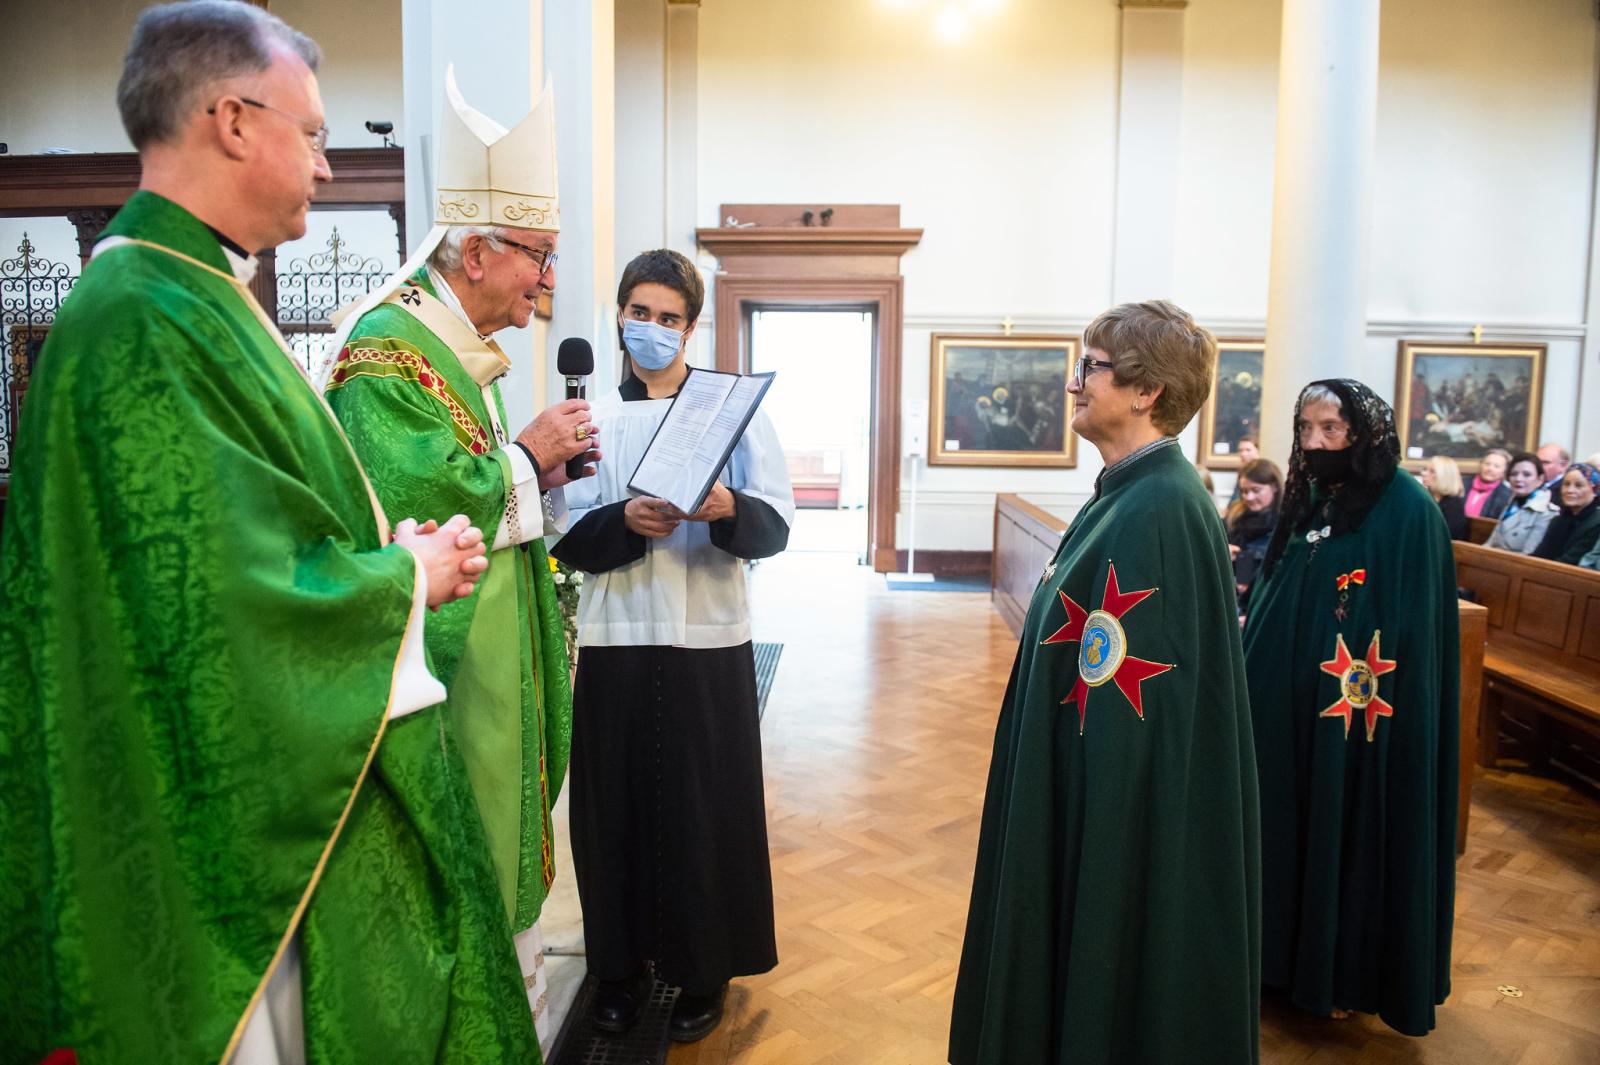 Cardinal bestows papal knighthood on Veronica Fulton